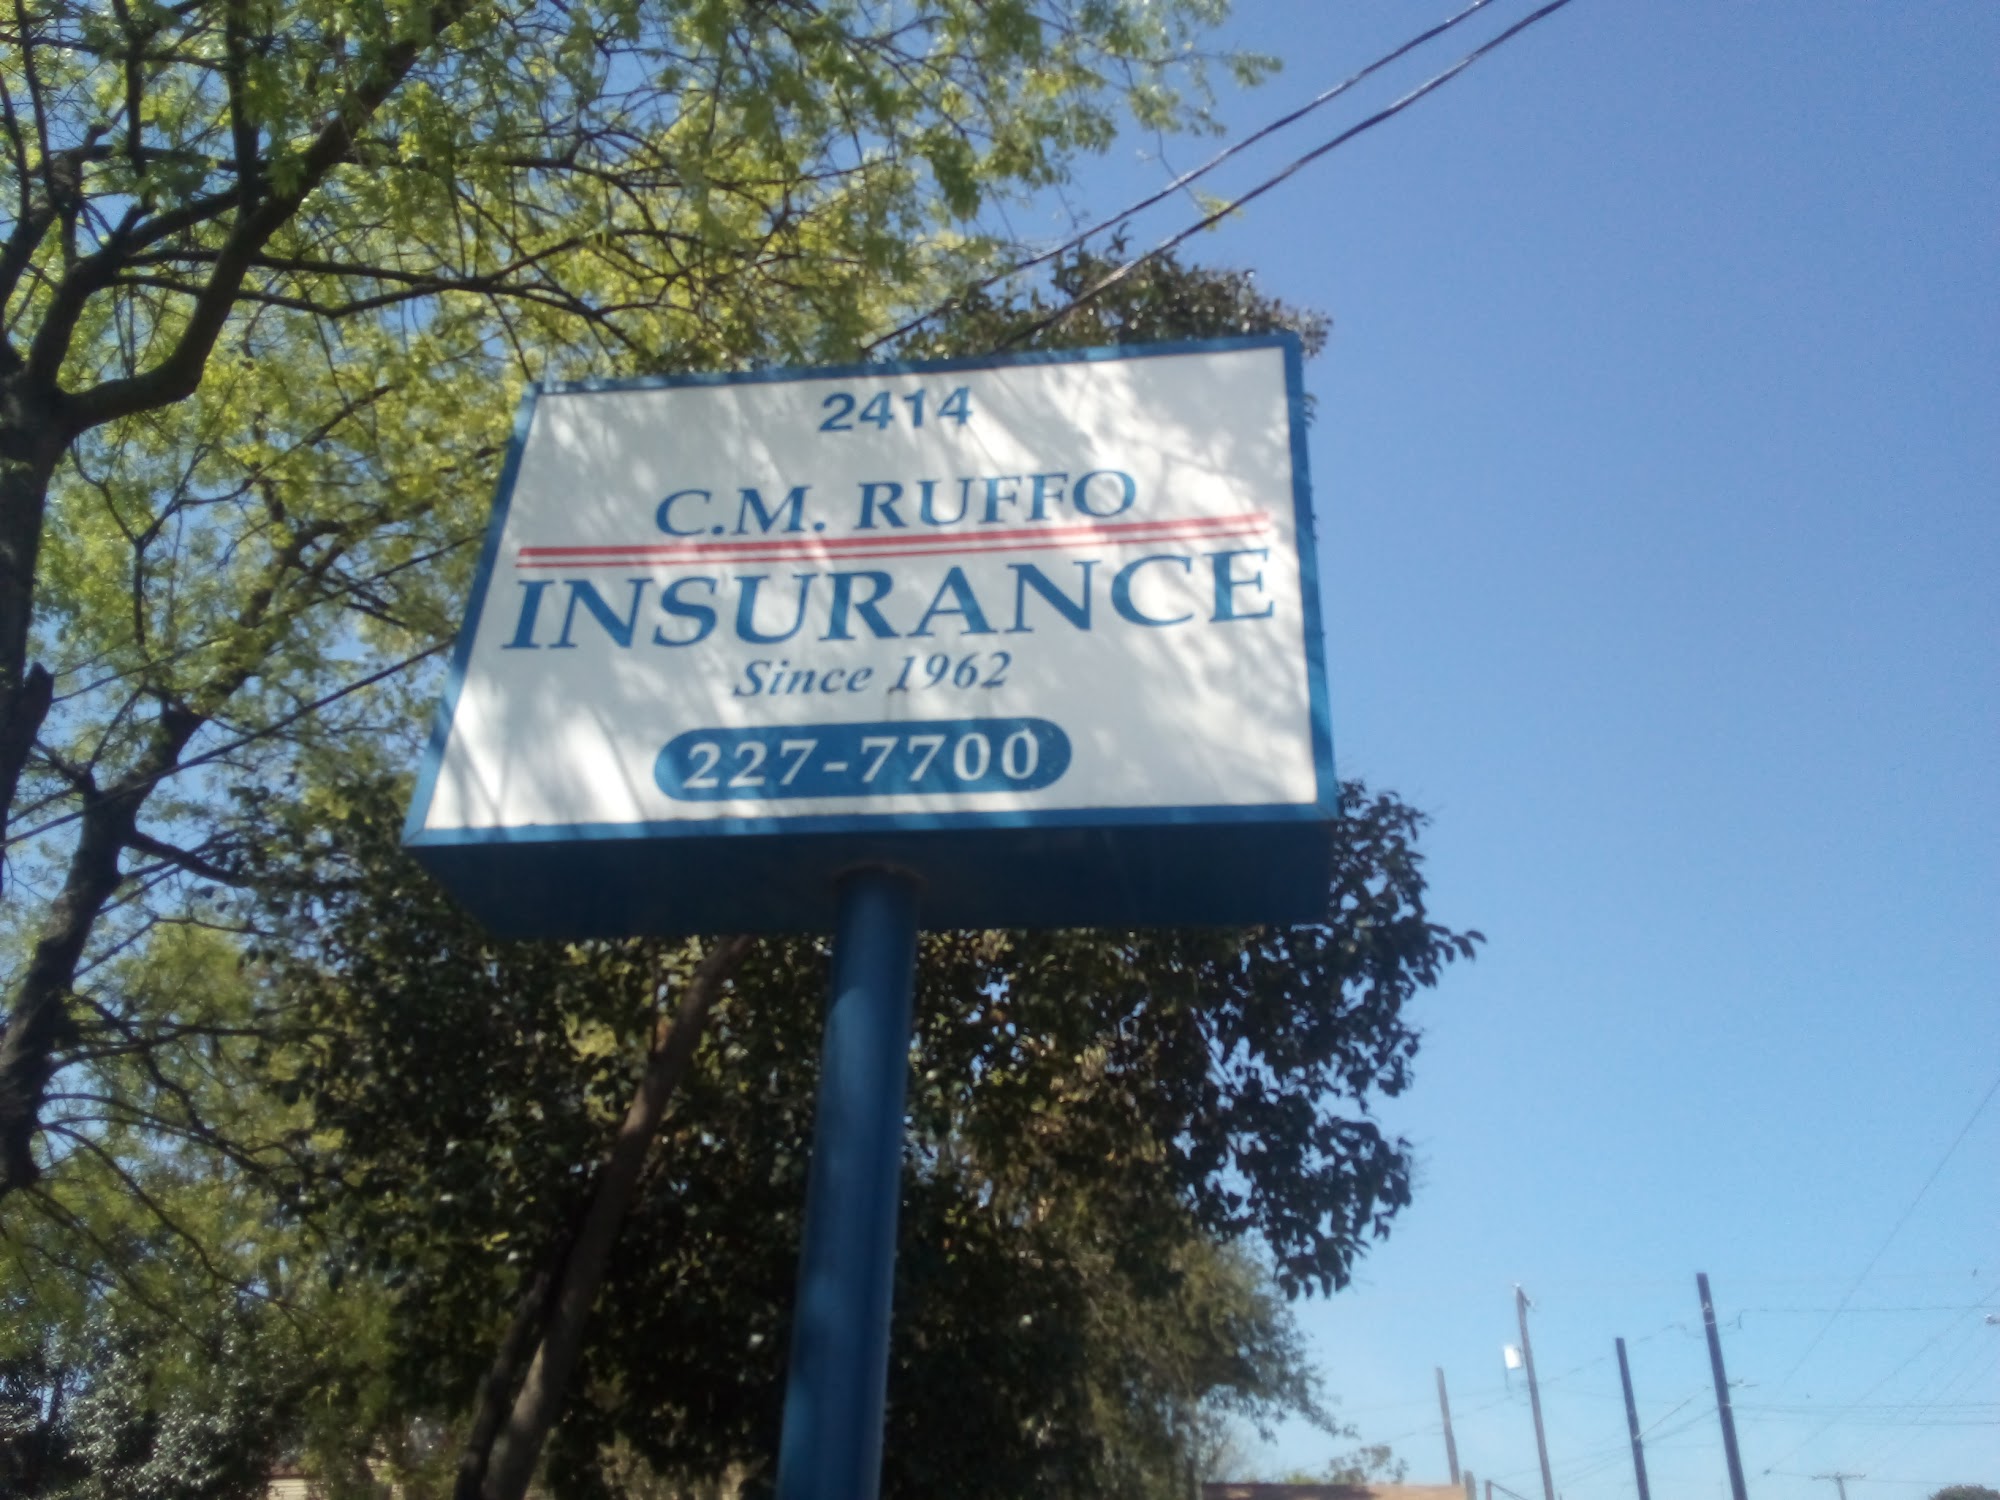 C.M. Ruffo General Insurance